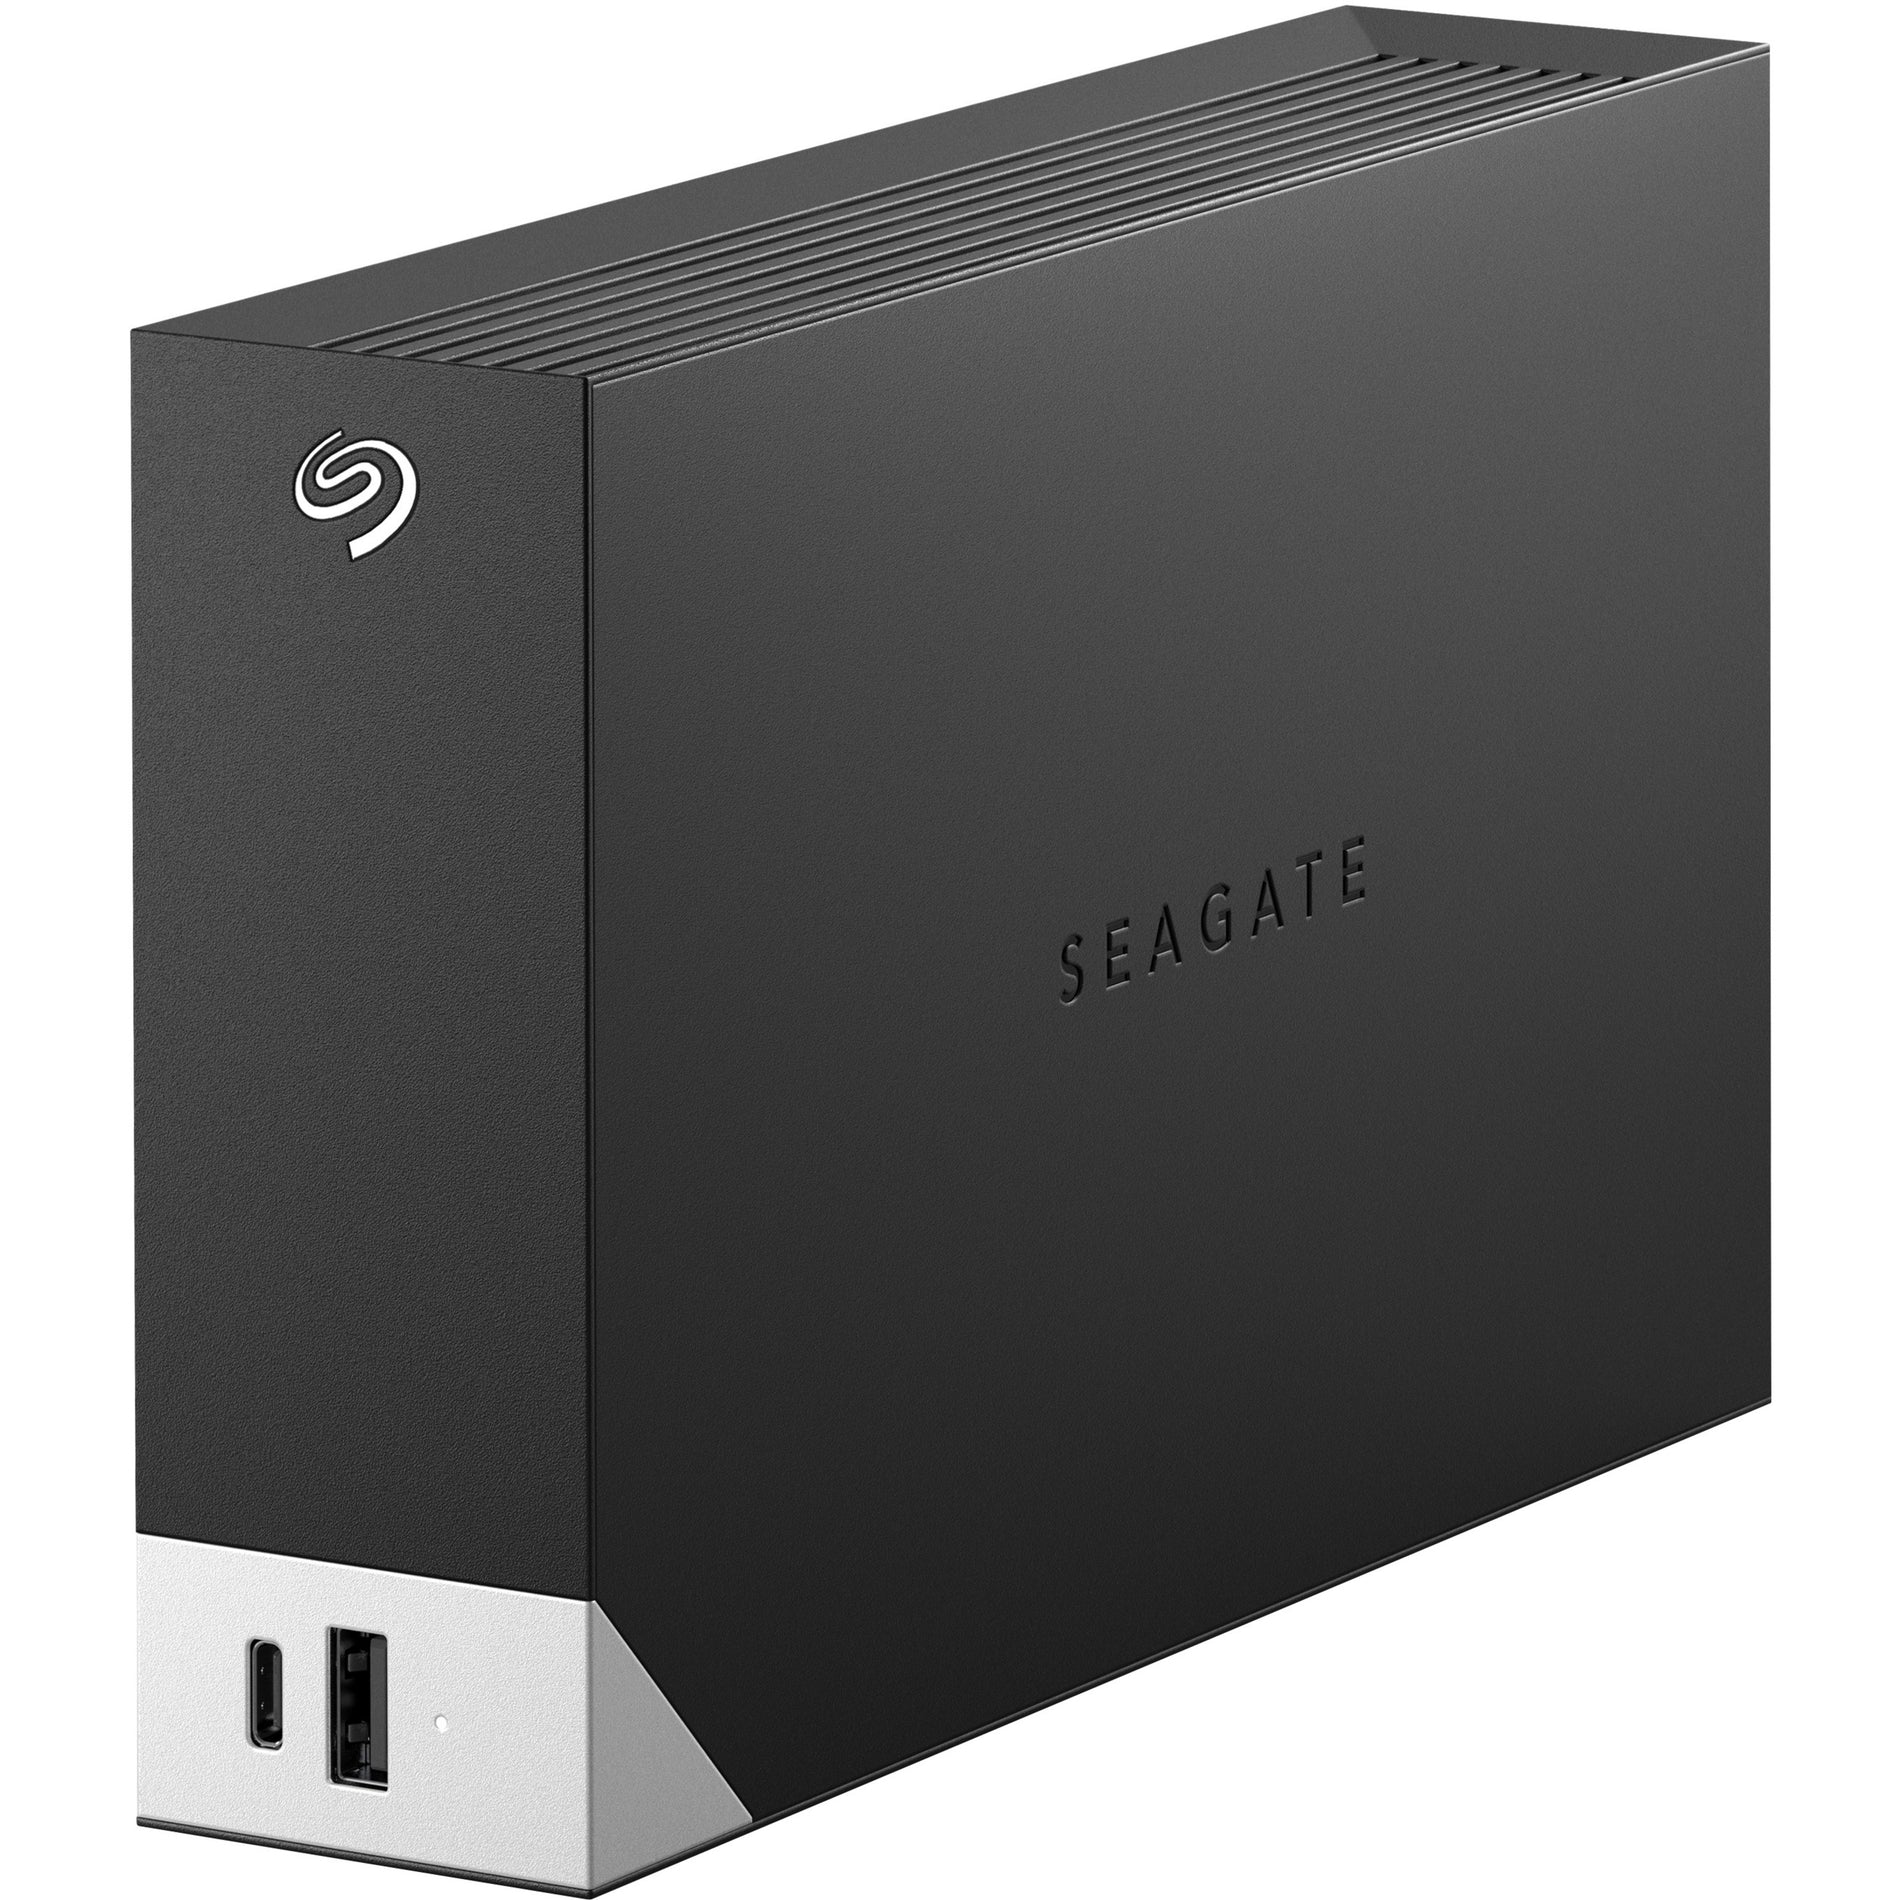 Seagate STLC14000400 One Touch Hard Drive, 14TB, USB 3.0, External, Black